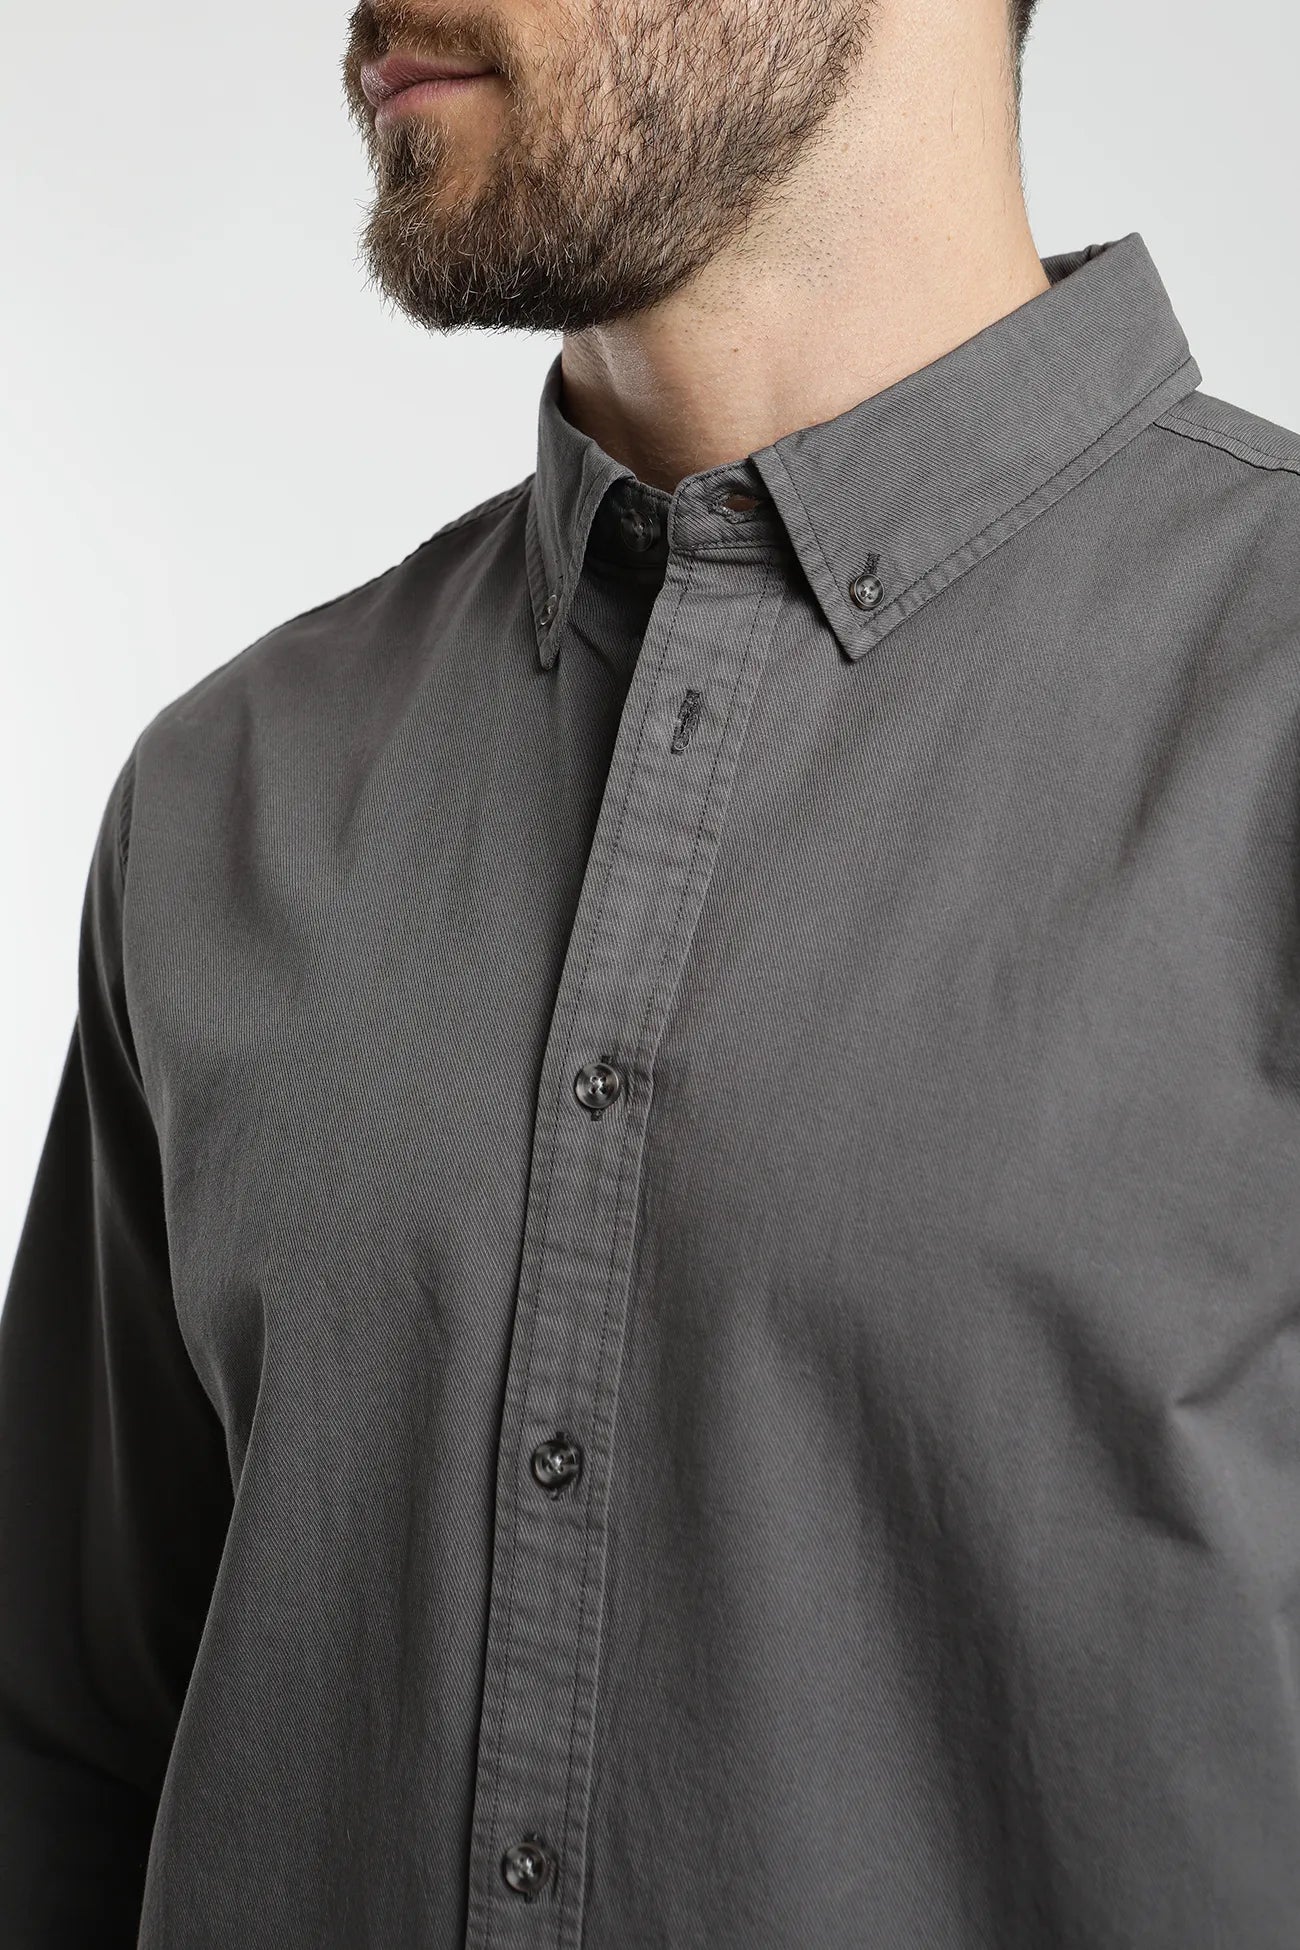 Camisa manga larga Sarga grafito - Algodón orgánico